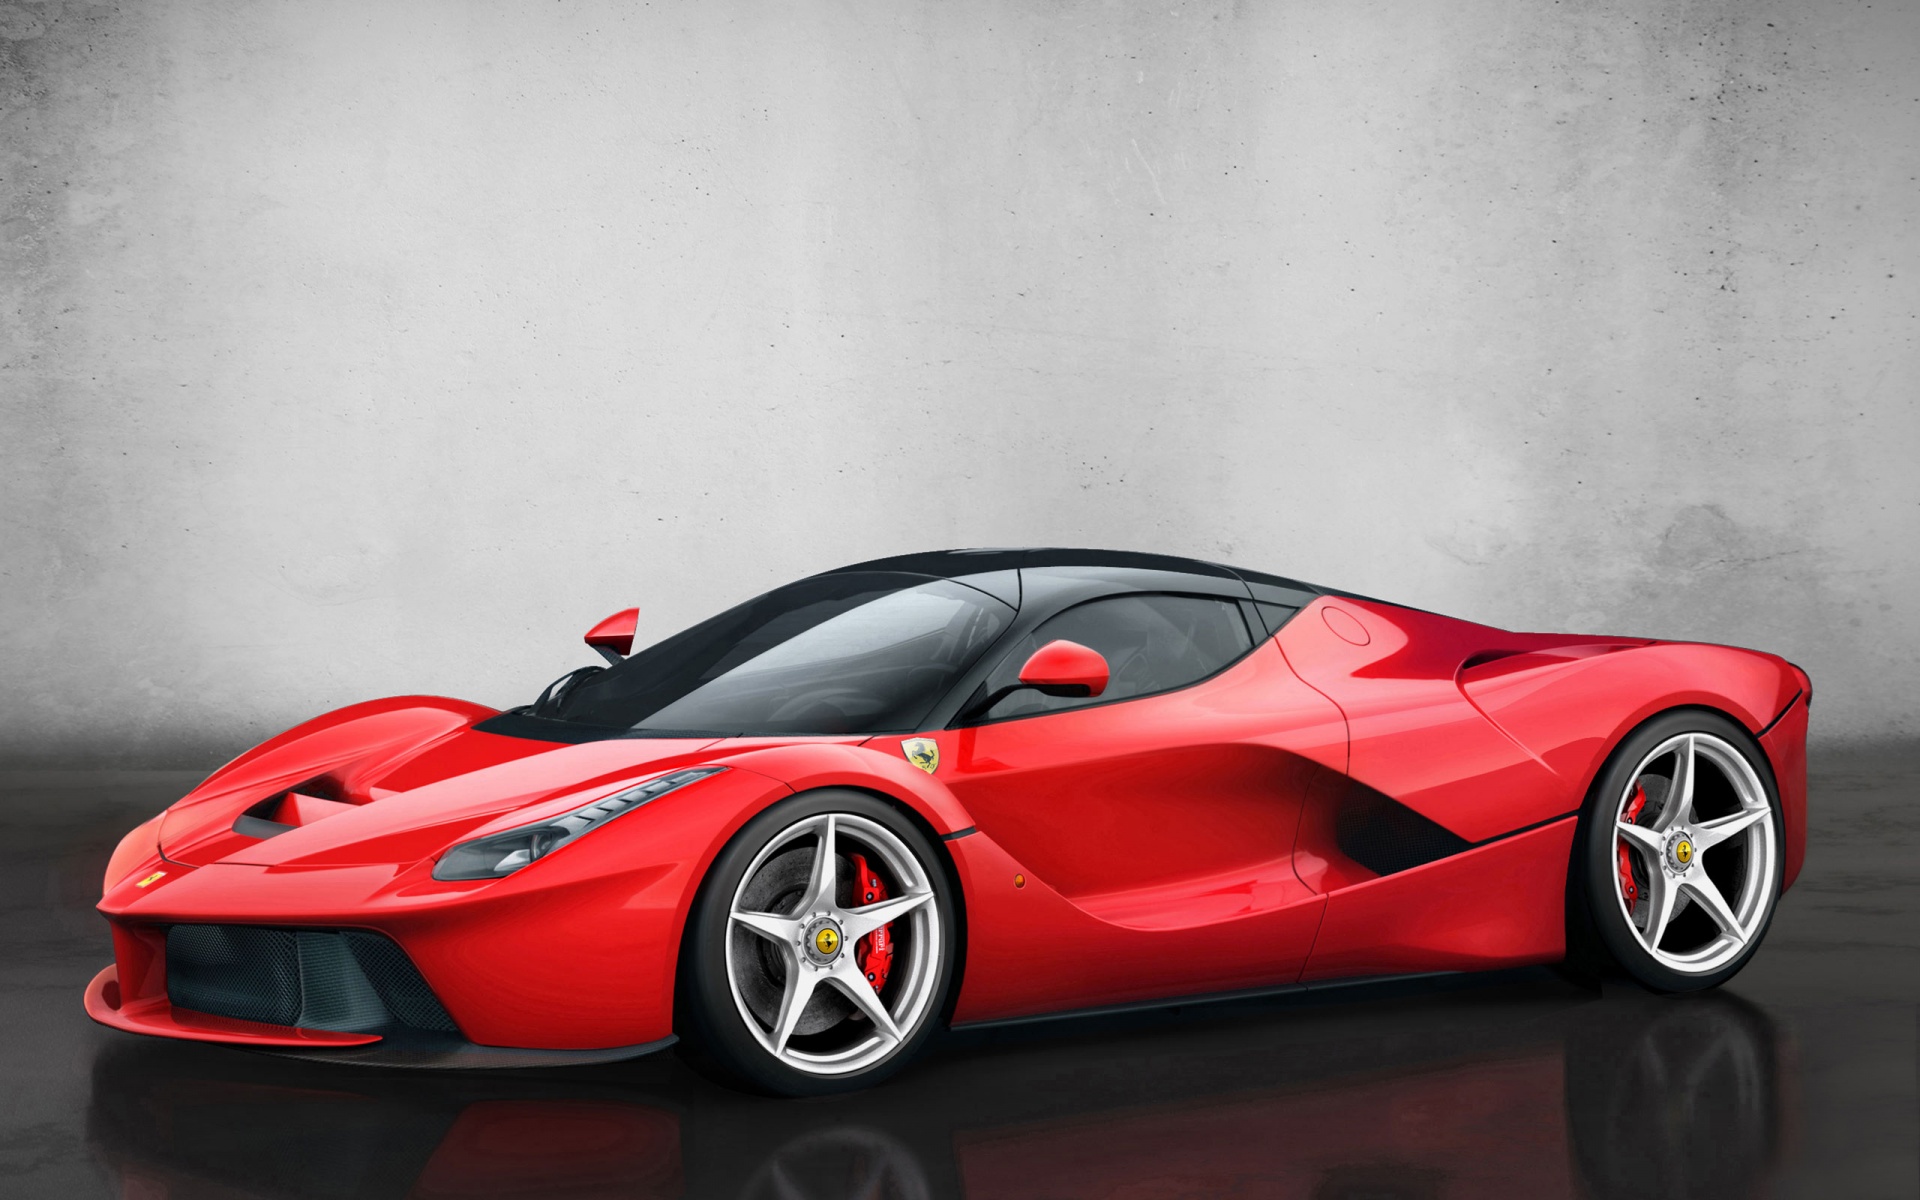 2014 Ferrari Laferrari Wallpaper in 1920x1200 Resolution